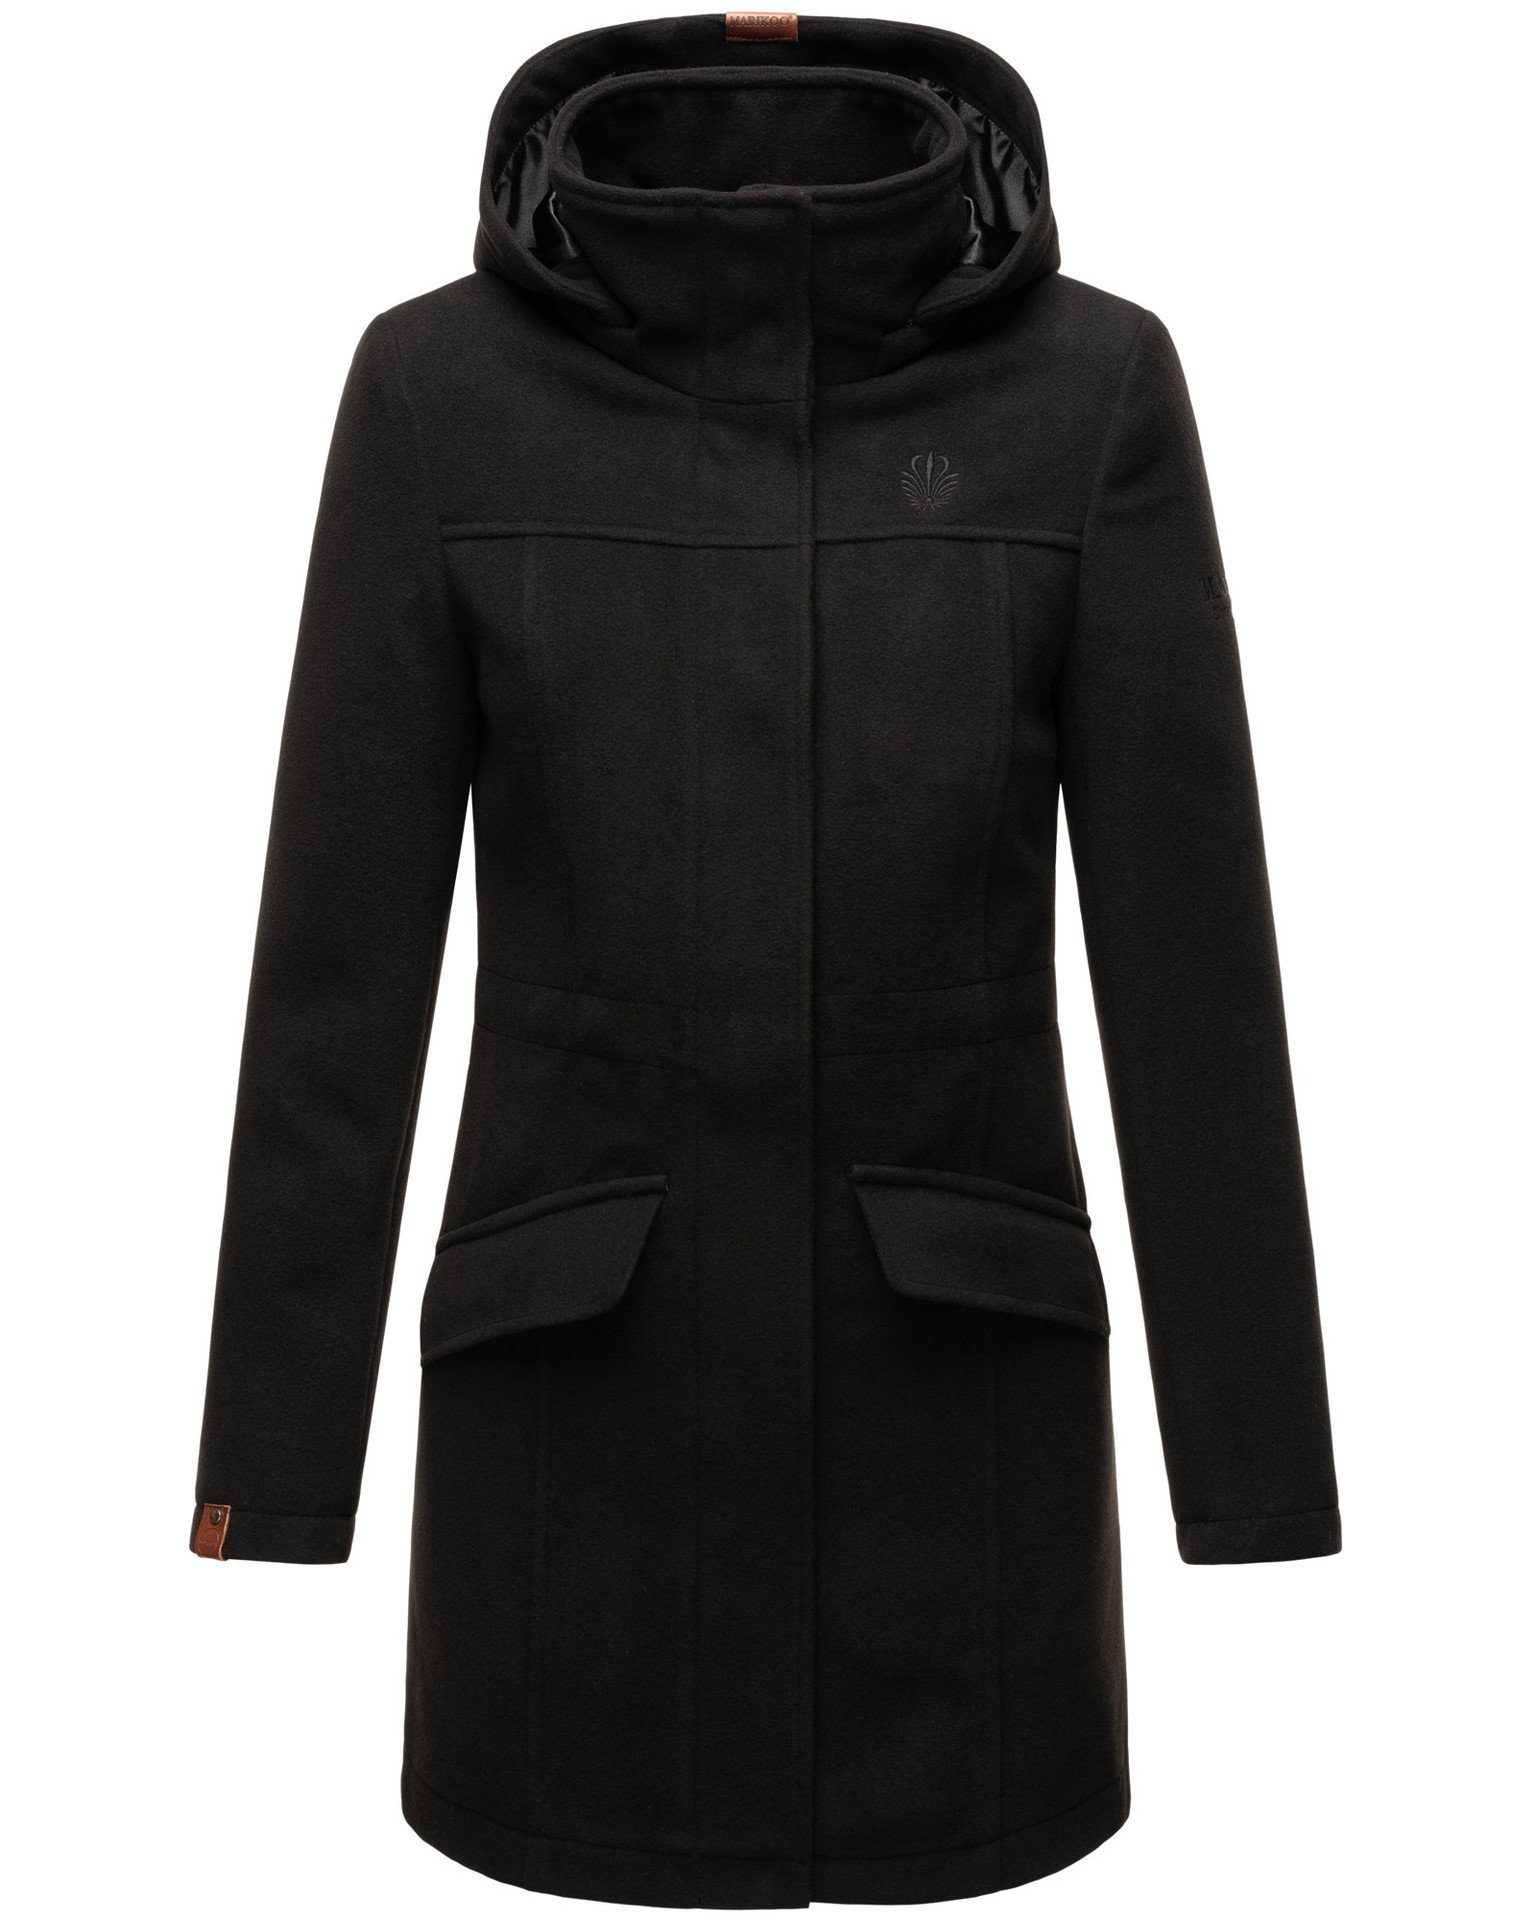 Marikoo Winterjacke Leilaniaa Mantel in schwarz abnehmbarer Woll mit Kapuze Optik